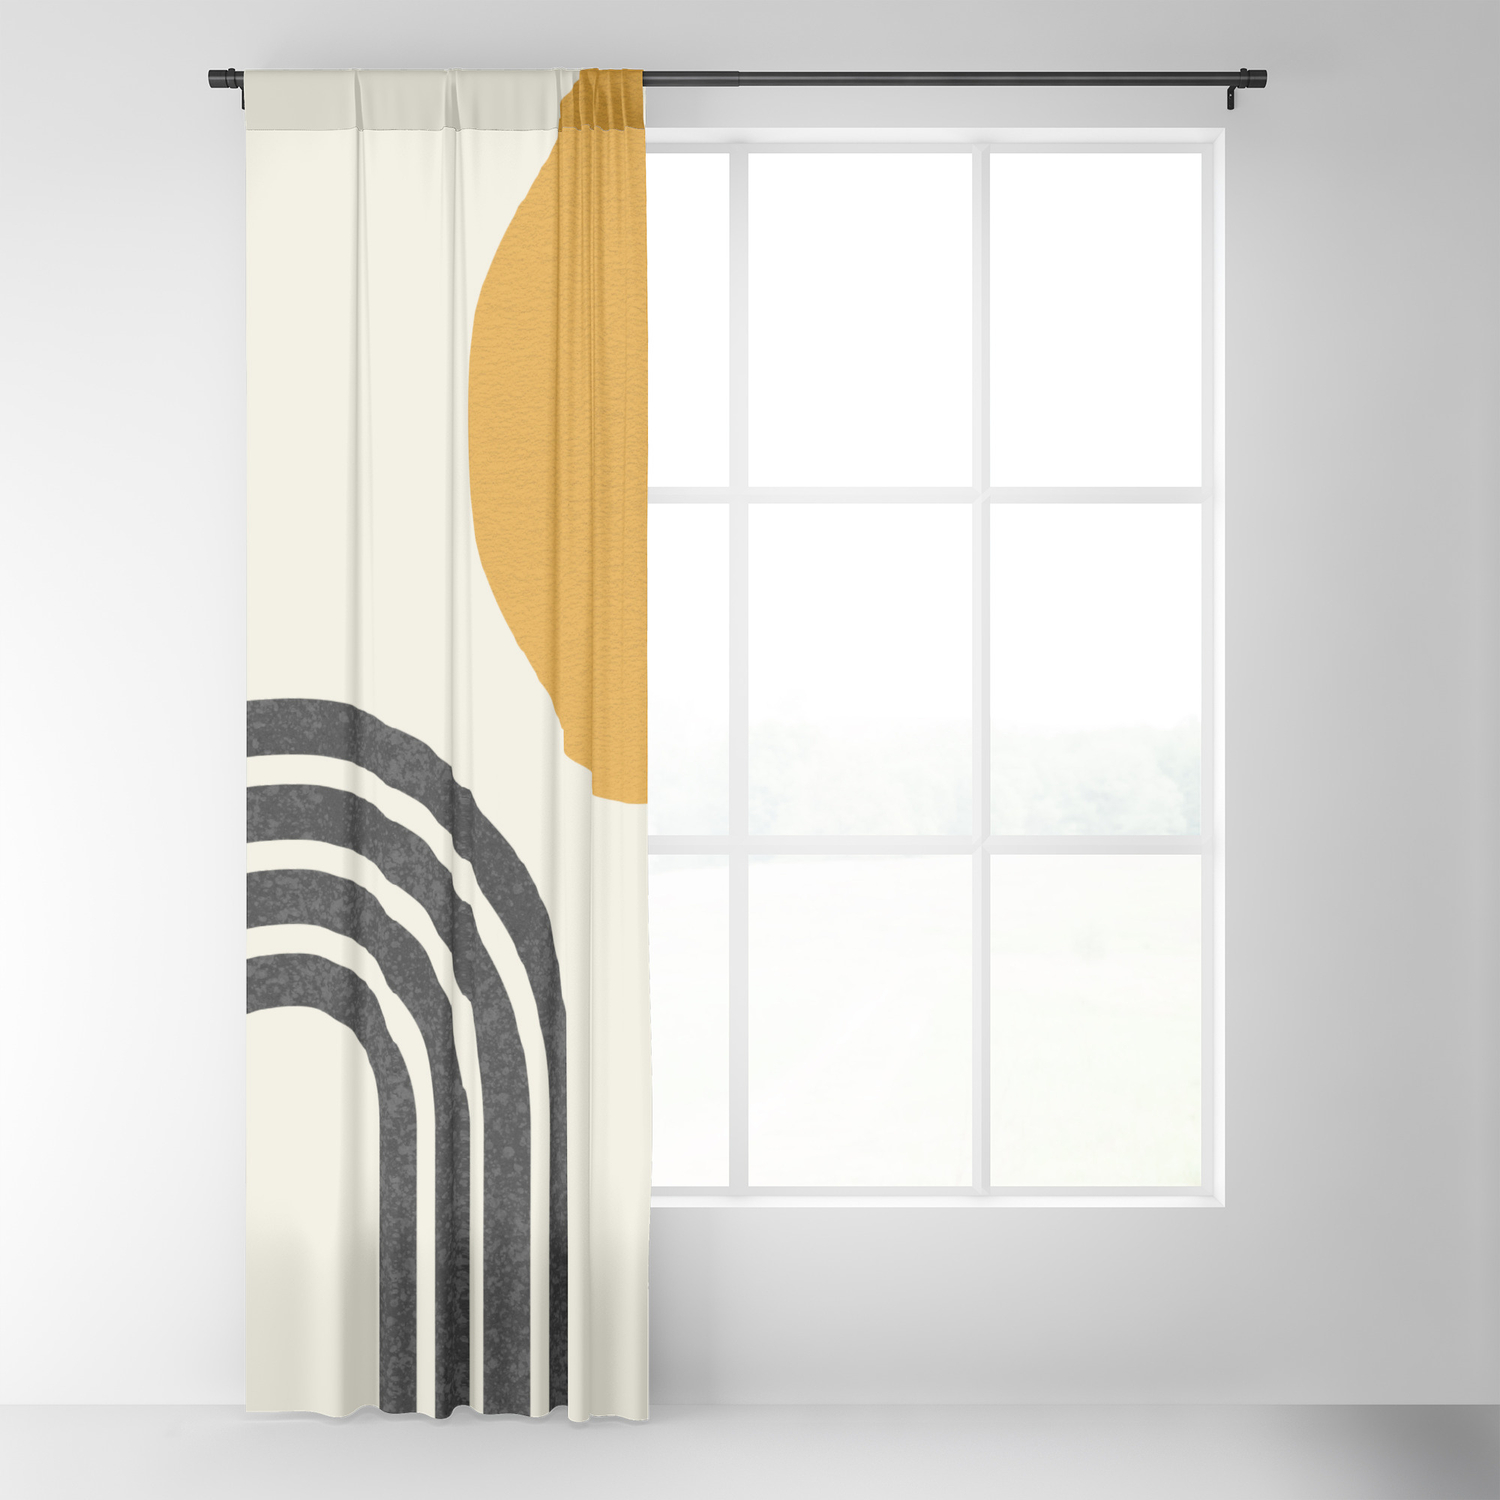 Retro Mid-Century Design Lined Window Curtains Black And White Geometric